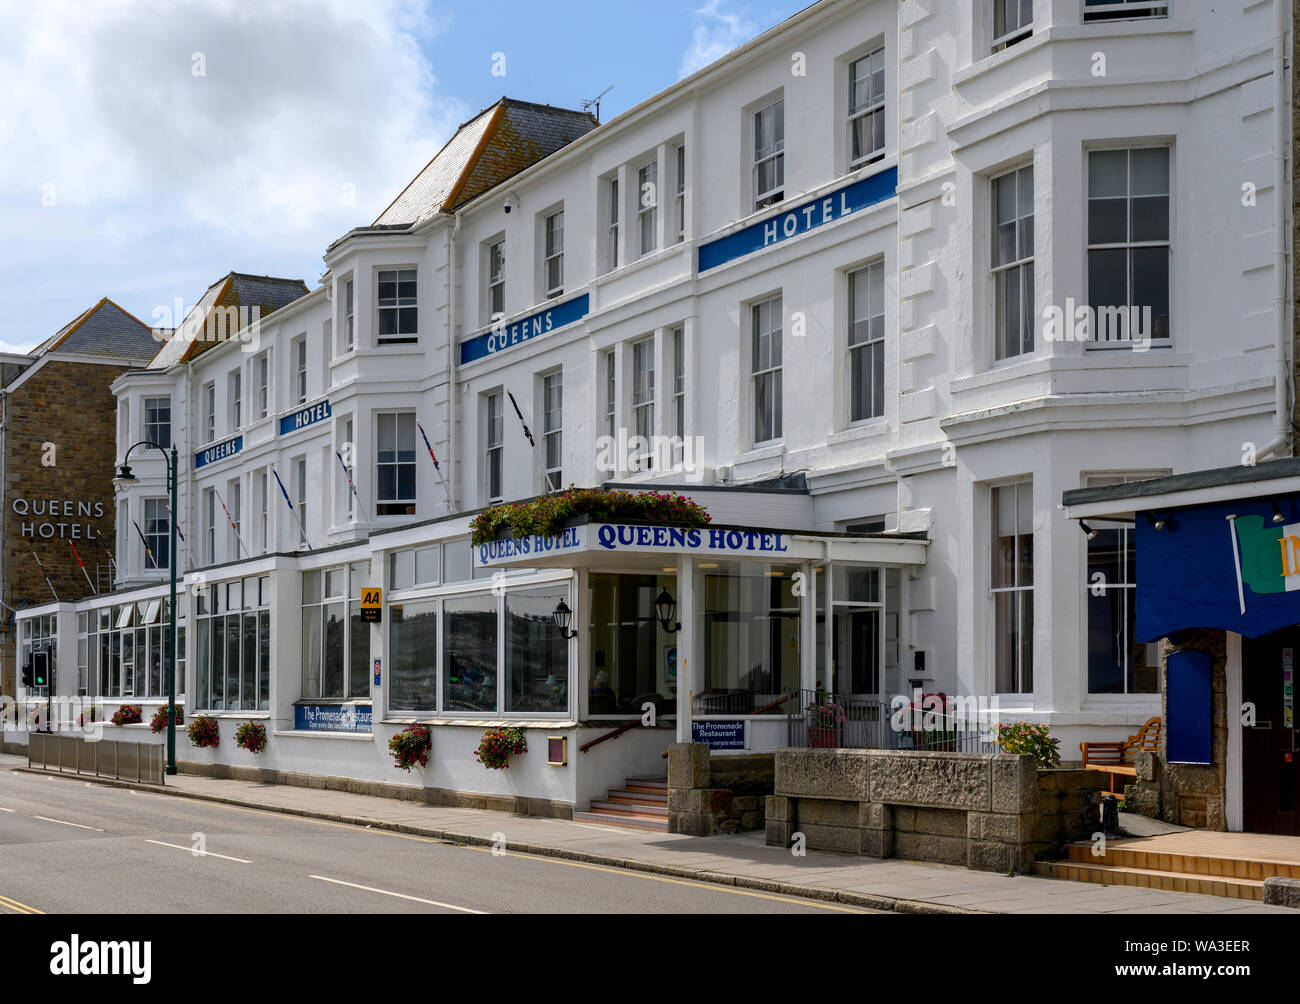 L'hôtel Queens, Western promenade, Penzance, Cornwall, England, UK Banque D'Images